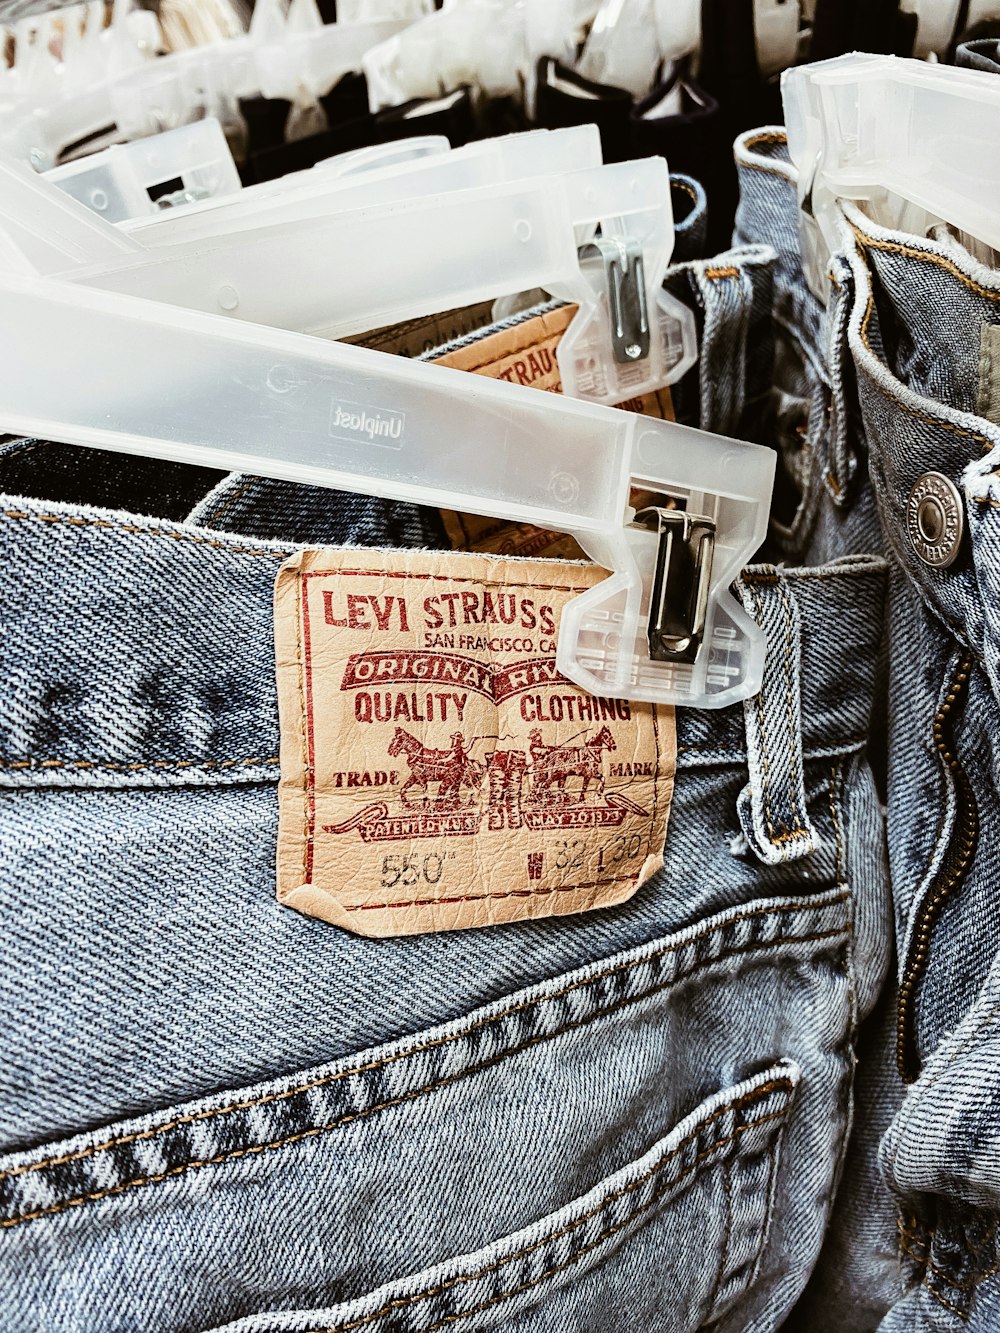 Levis Jeans Pictures | Download Free Images on Unsplash